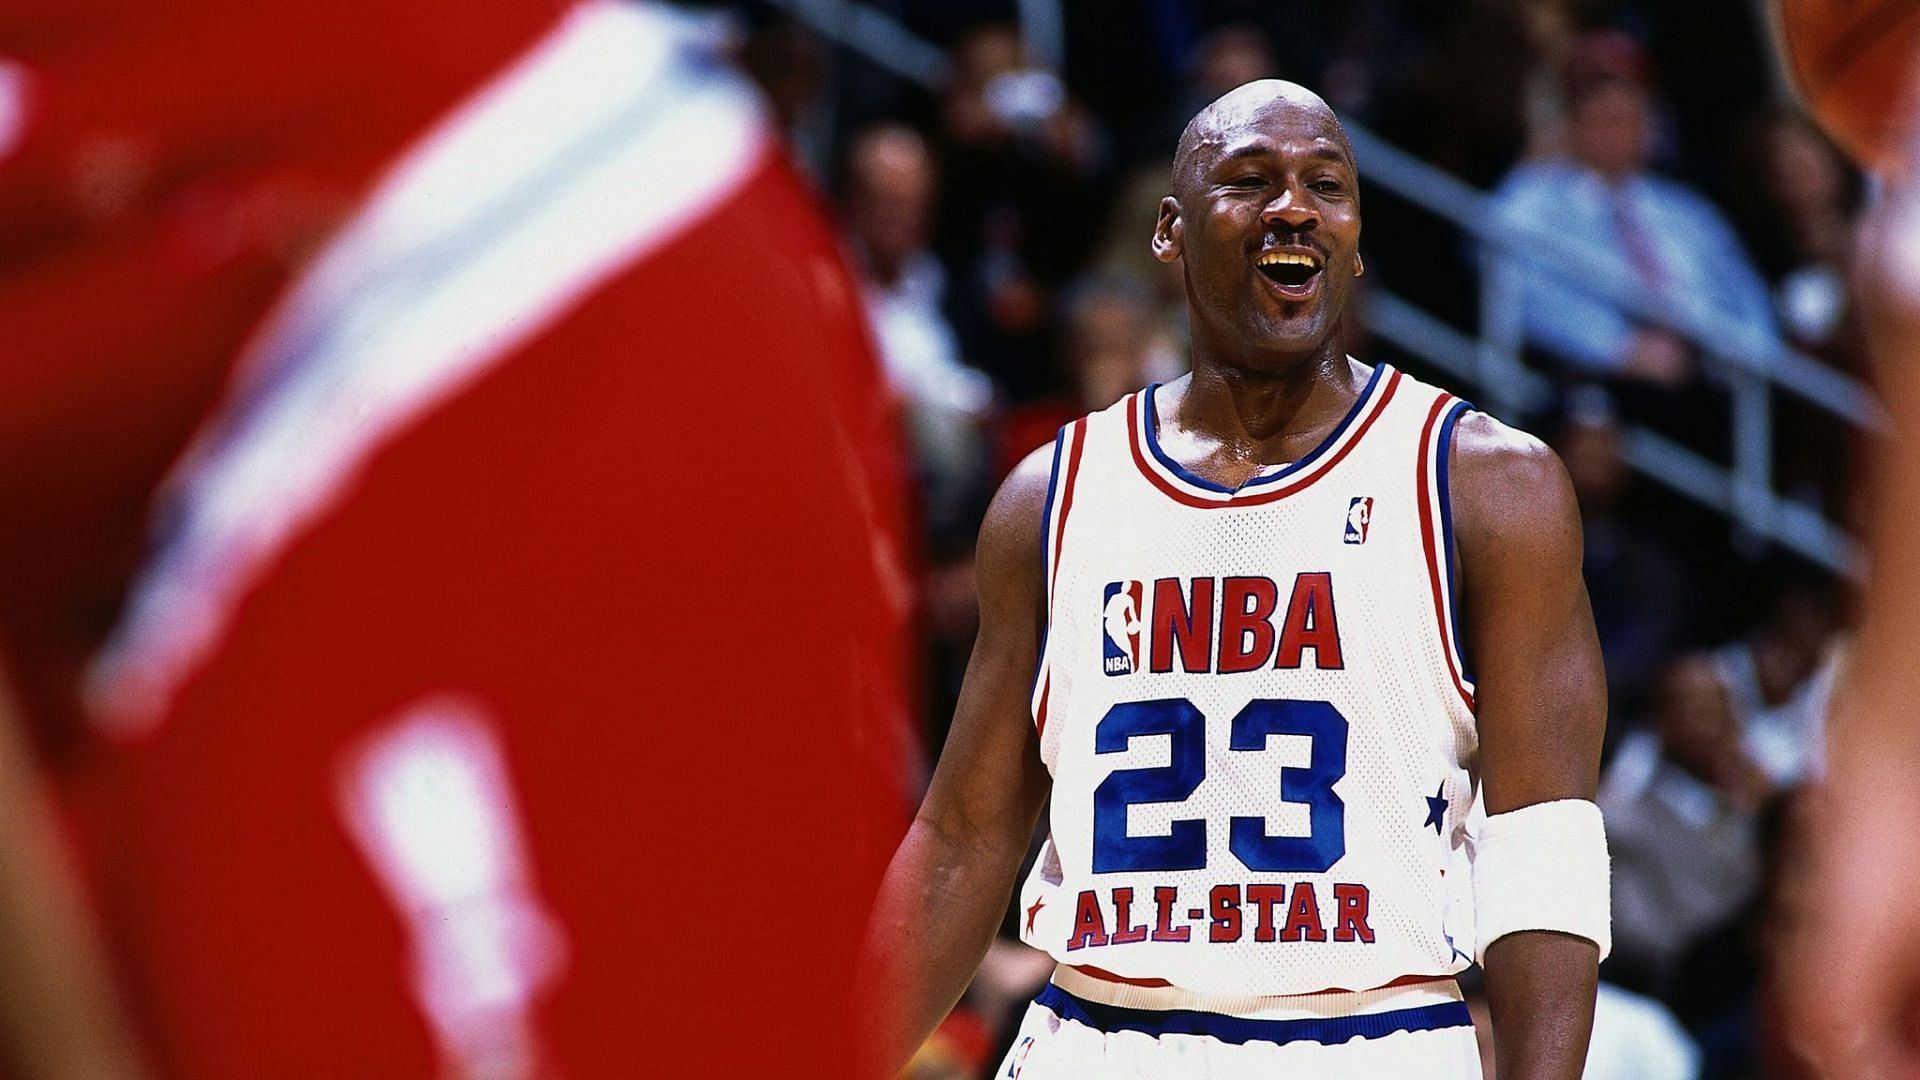 Michael Jordan, a star among All-Stars